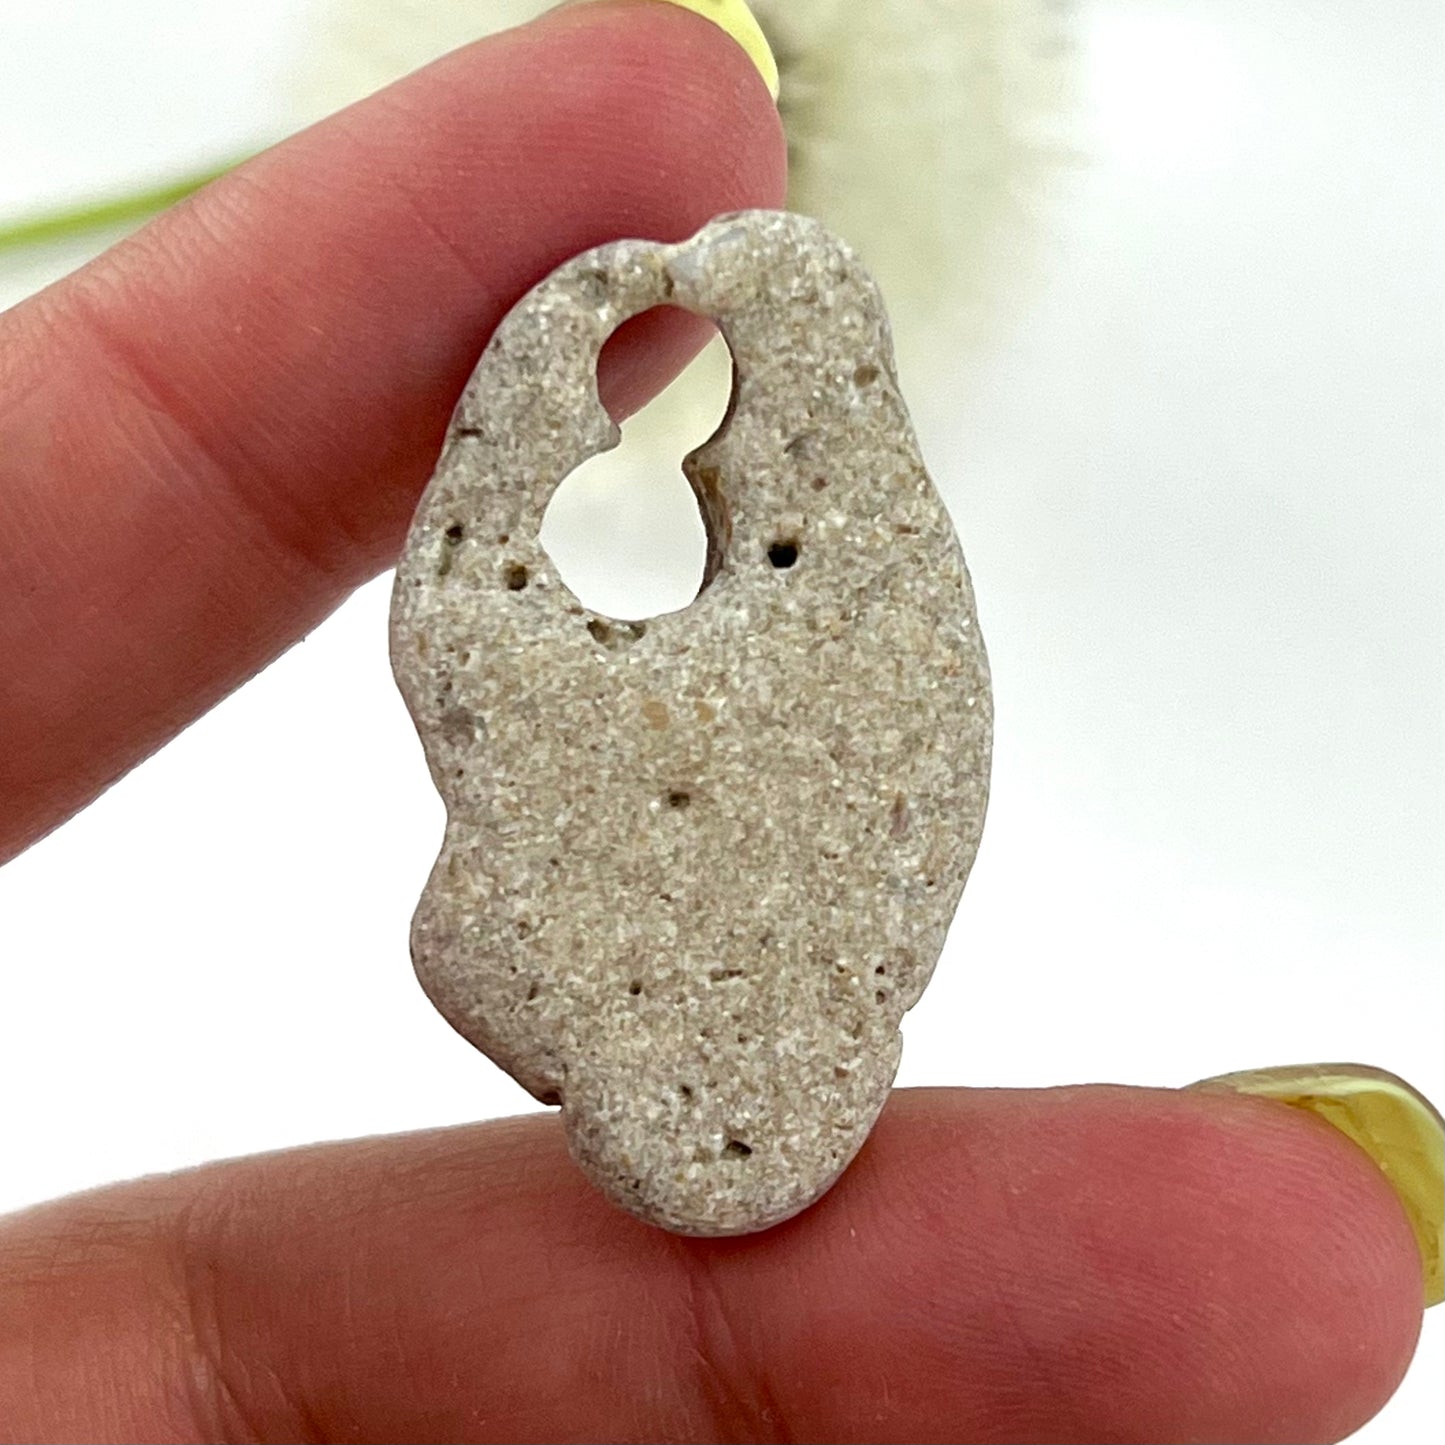 Adder Stone (Hag Stone) - Mineral Specimen